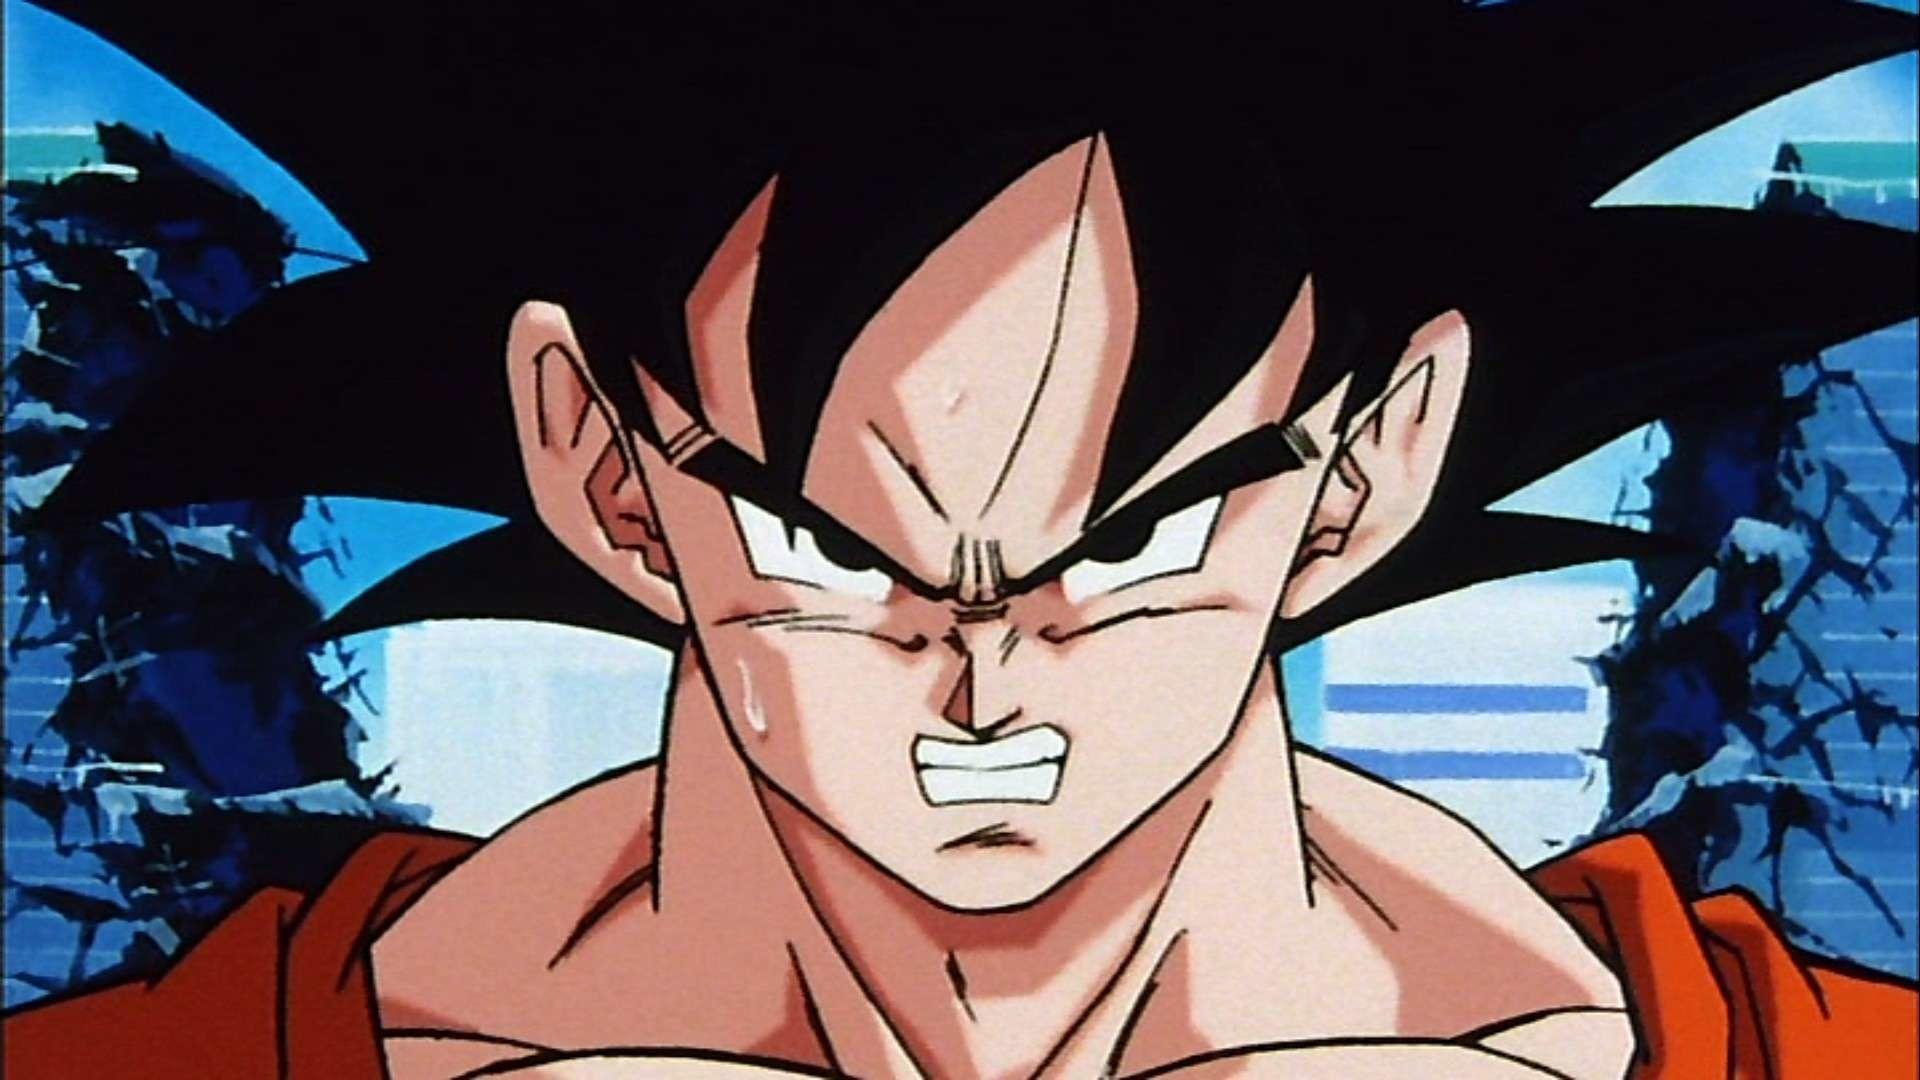 Goku May Soon No Longer Be Dragon Ball's Strongest Character